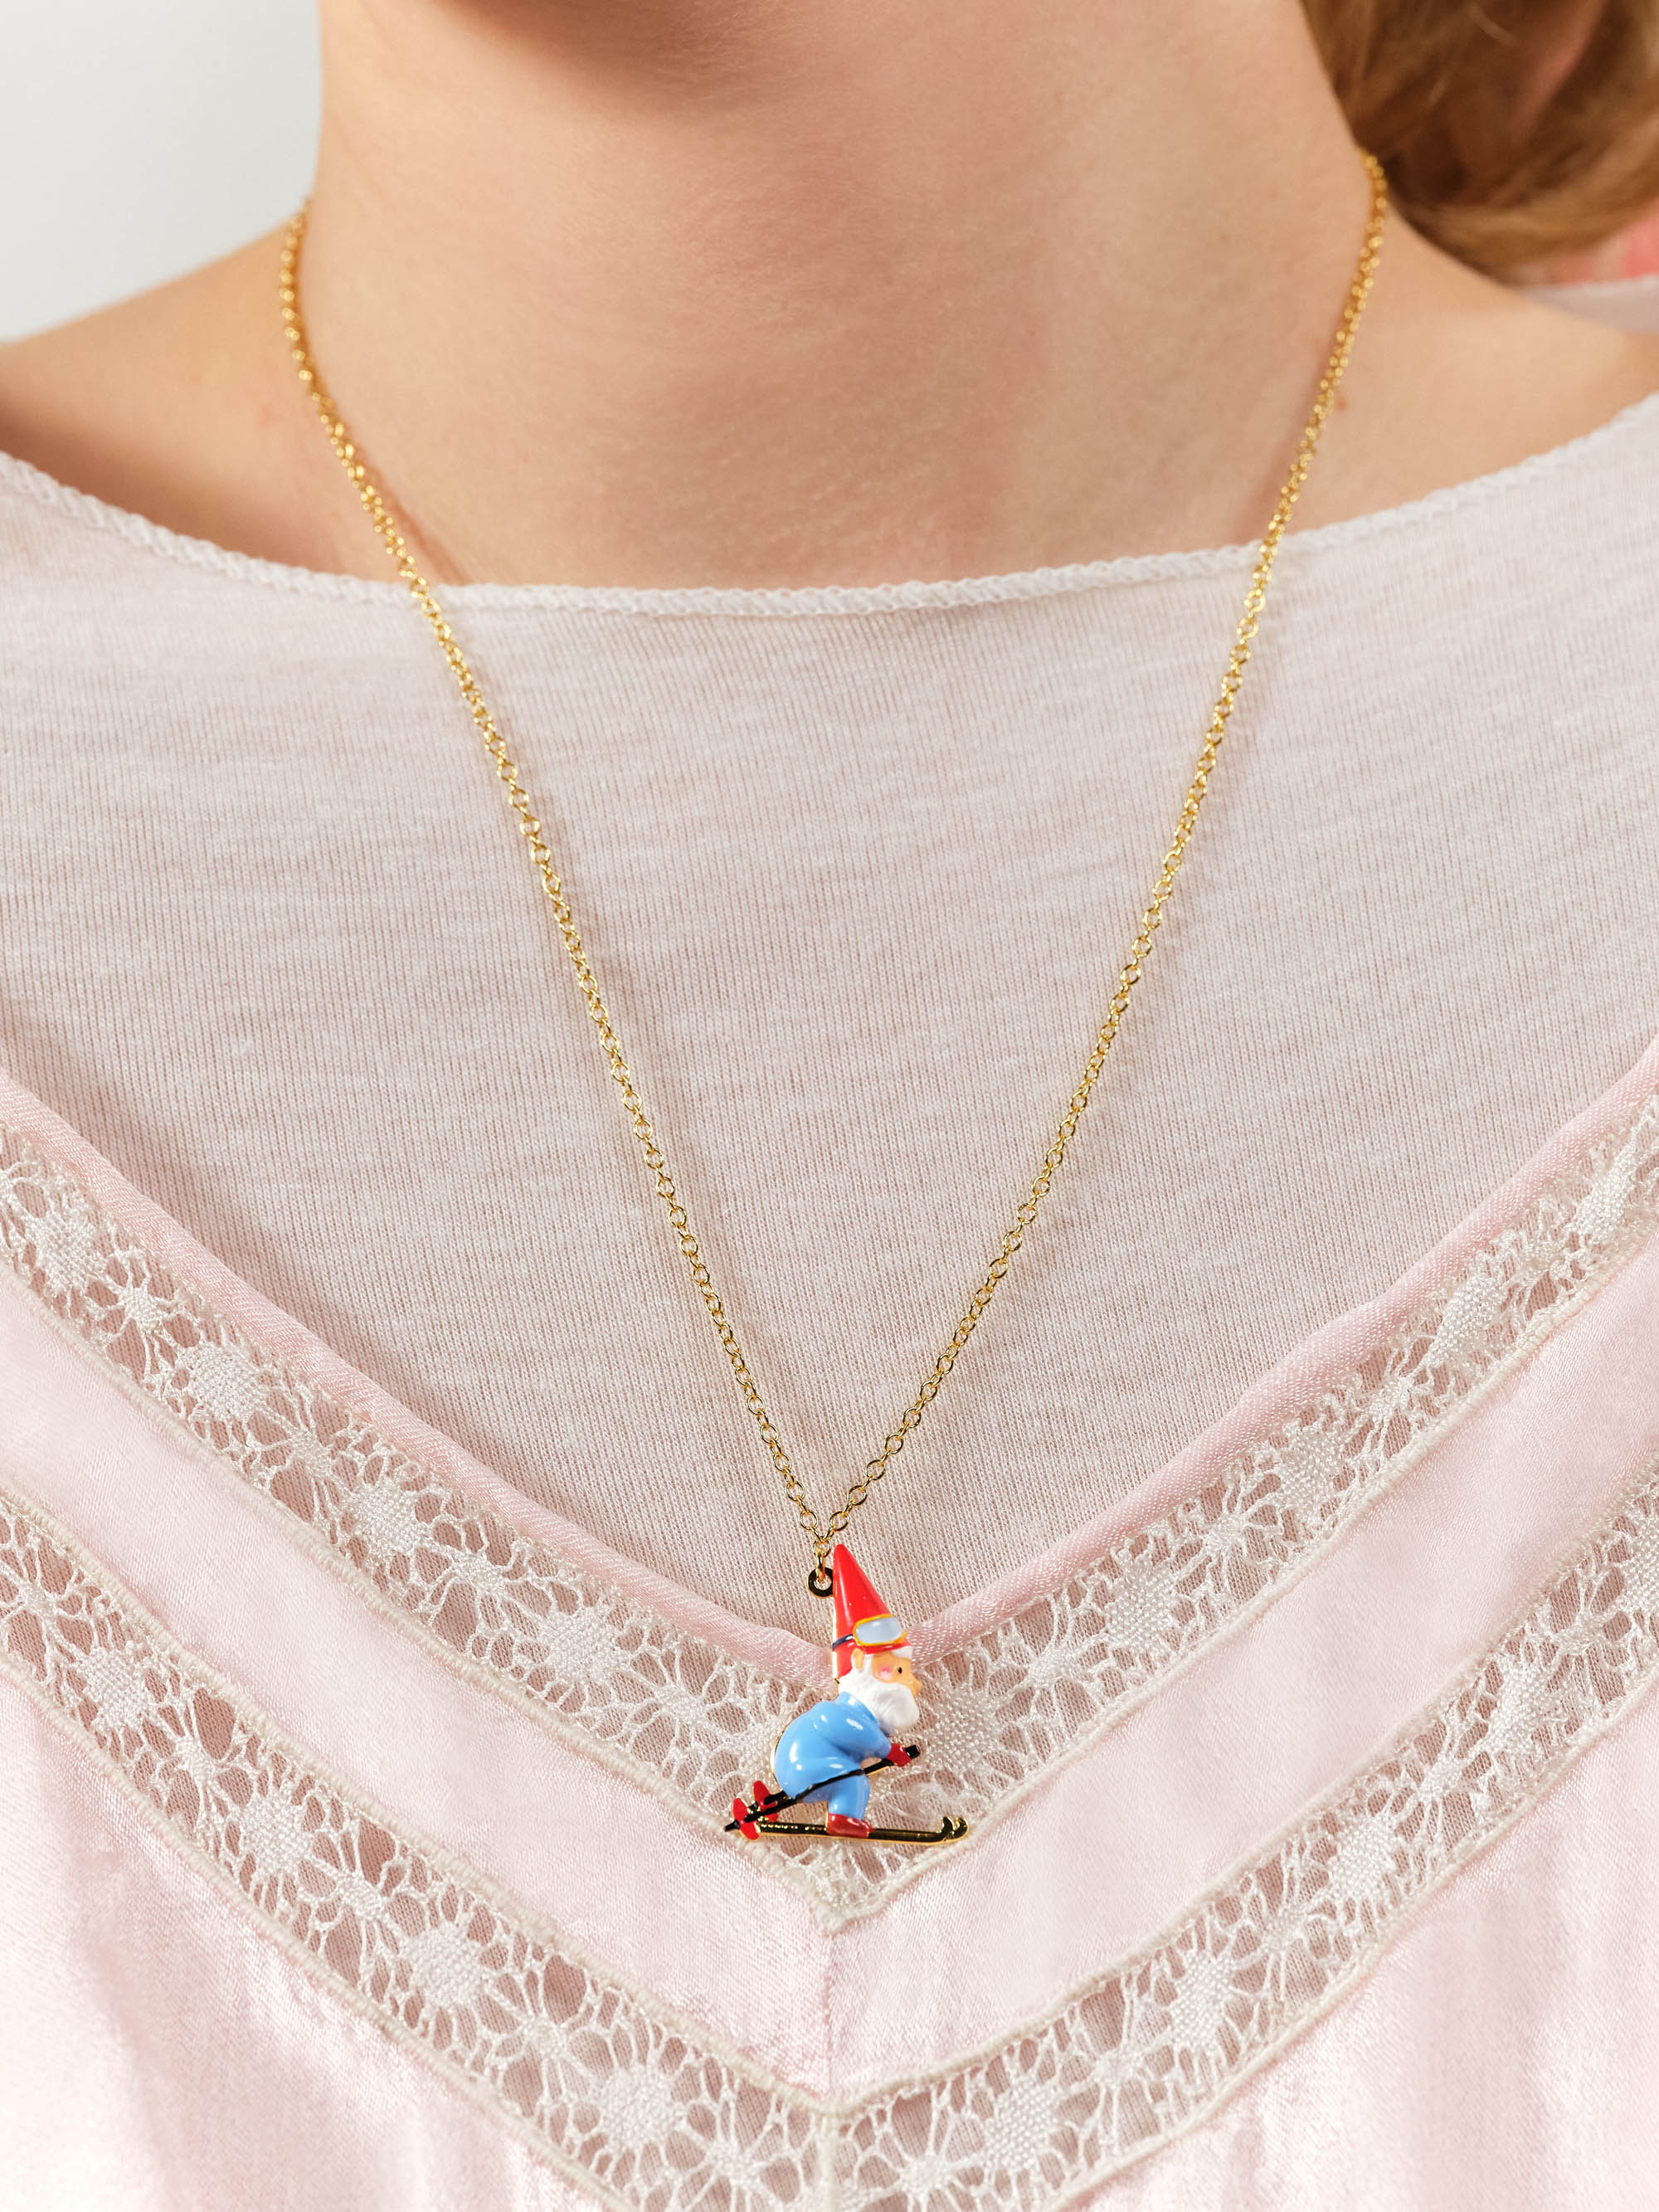 Garden gnomes and ski pendant necklace